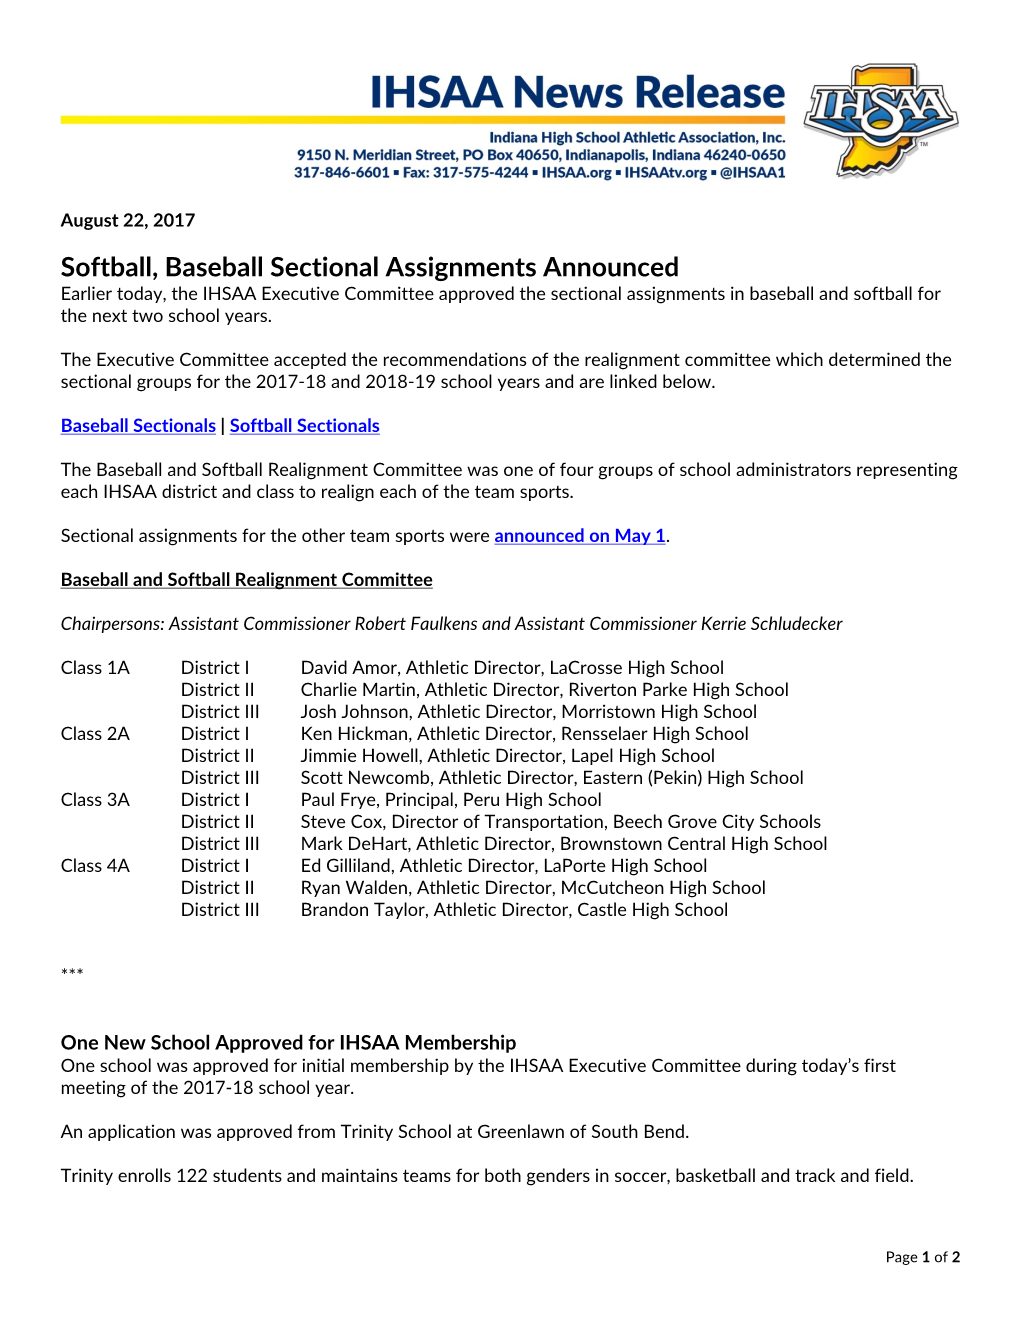 Softball, Baseball Sectional Assignments Announced